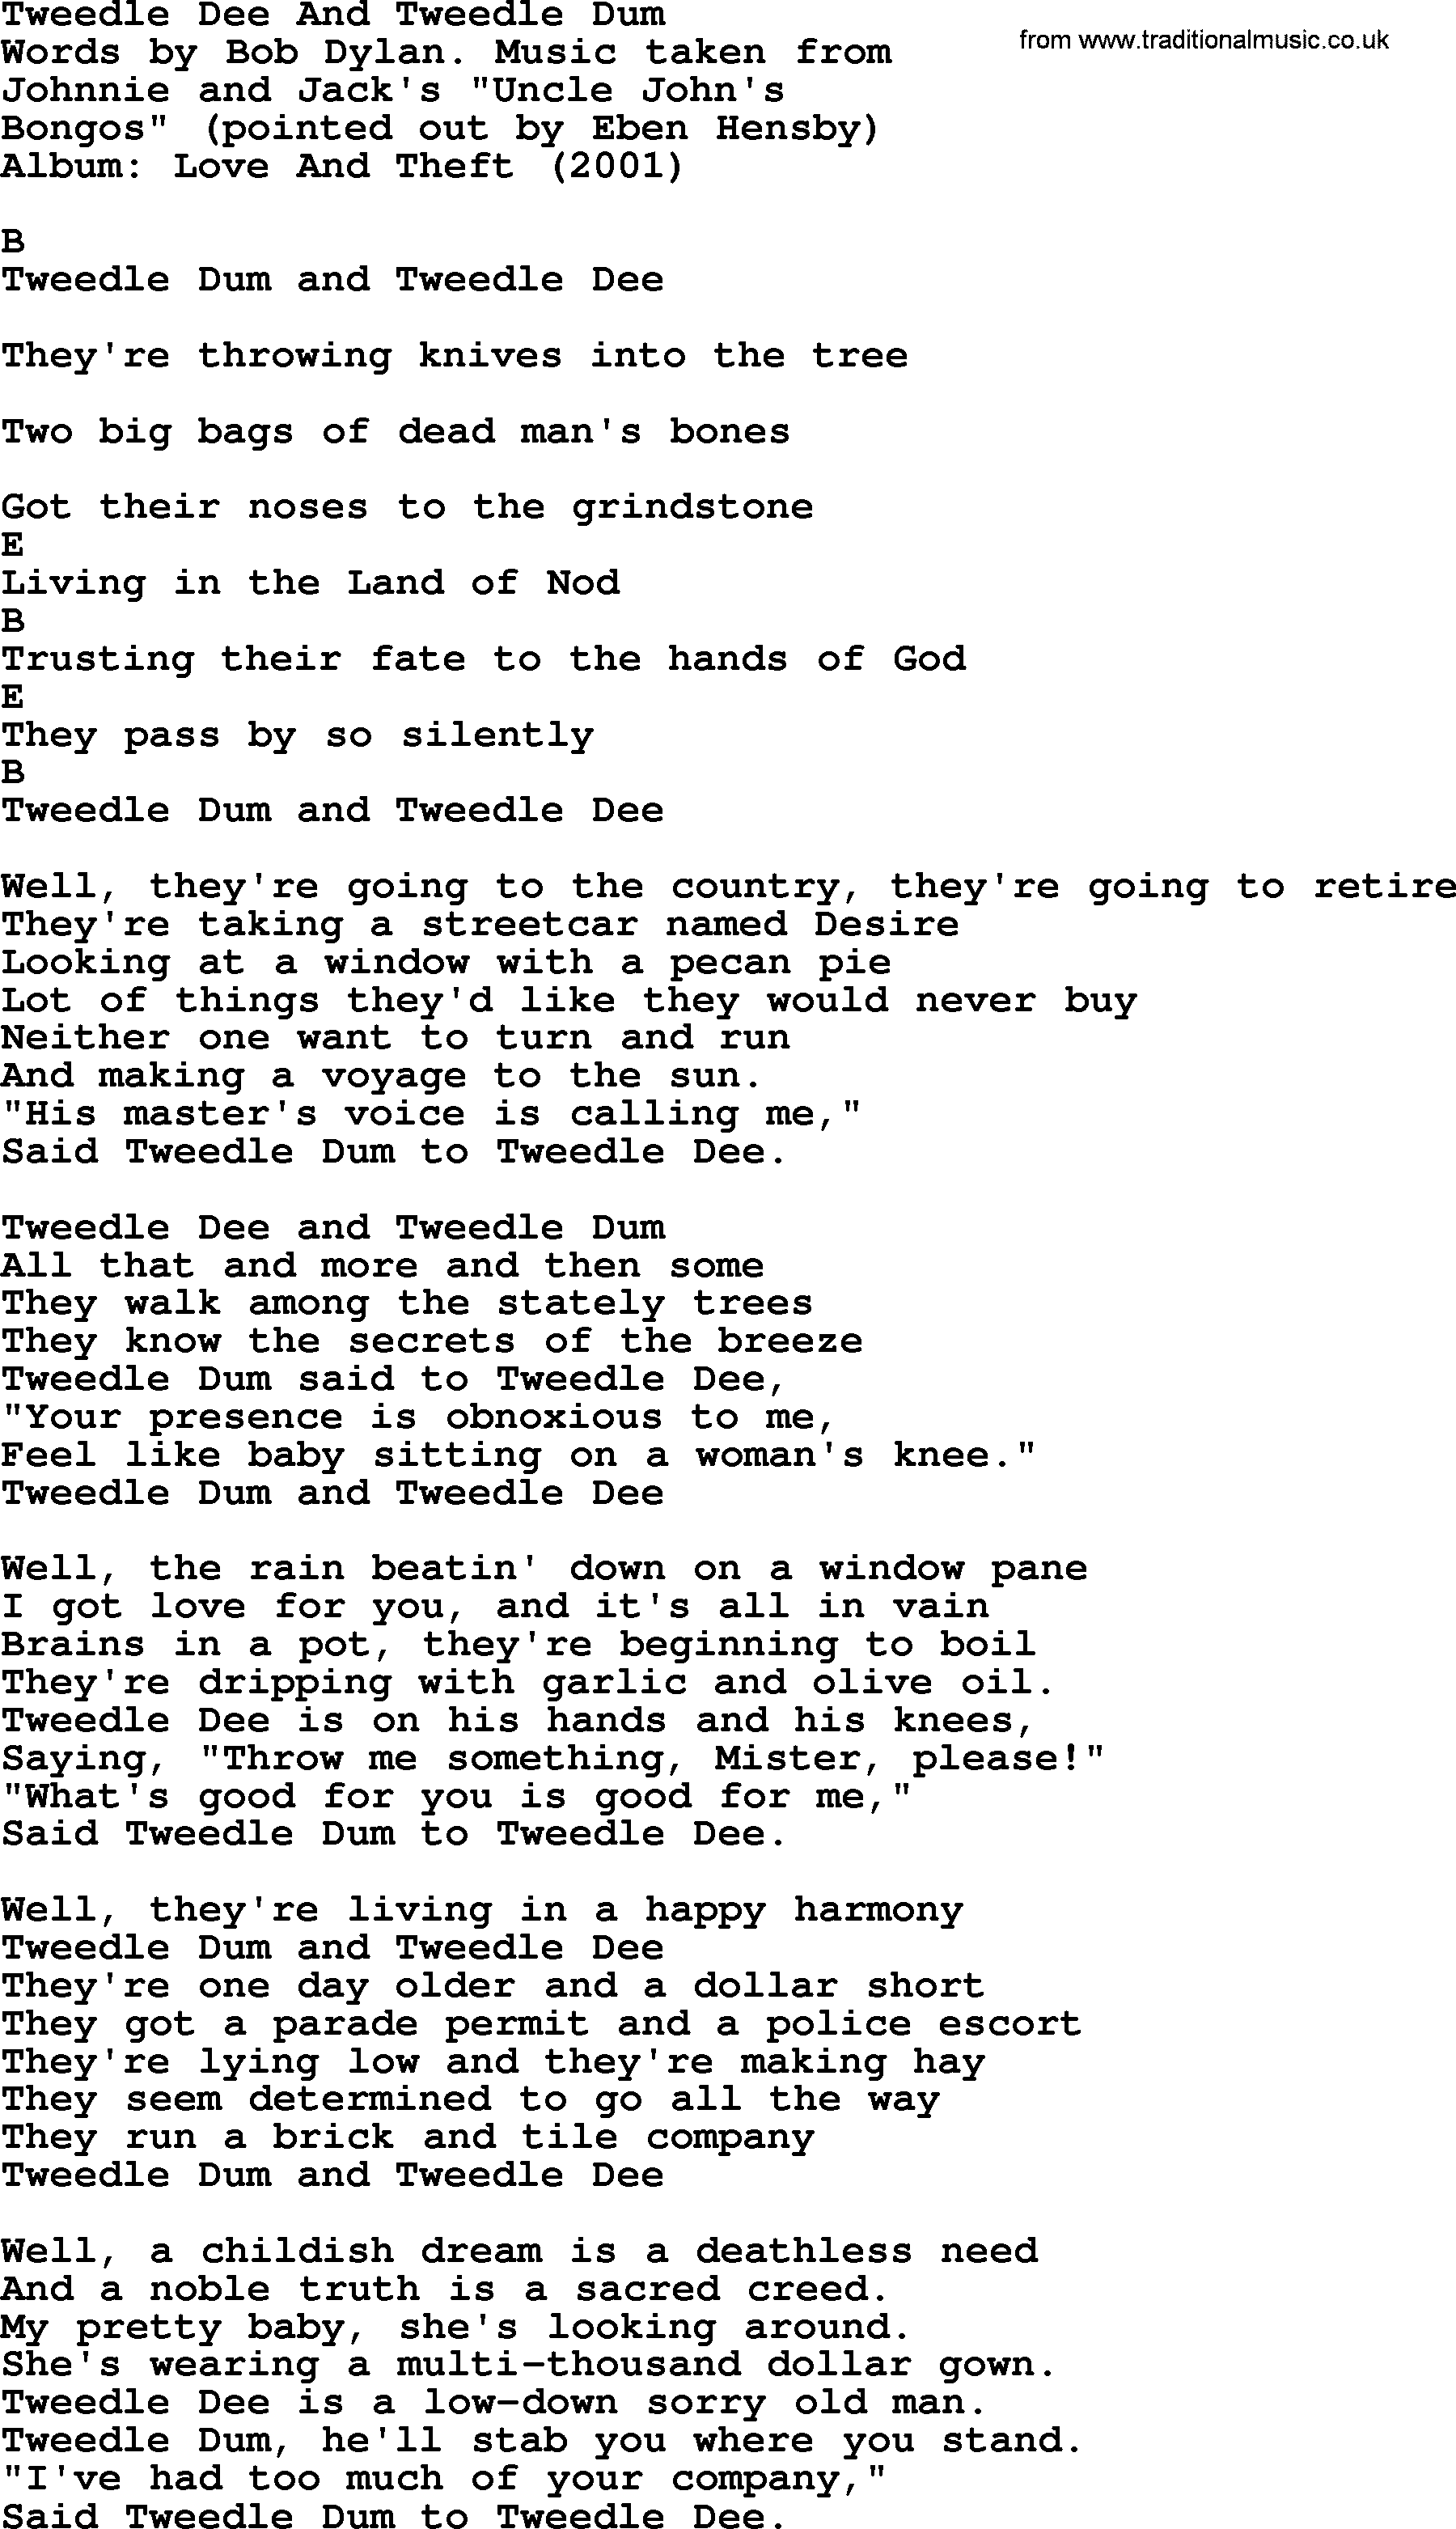 Bob Dylan song, lyrics with chords - Tweedle Dee And Tweedle Dum